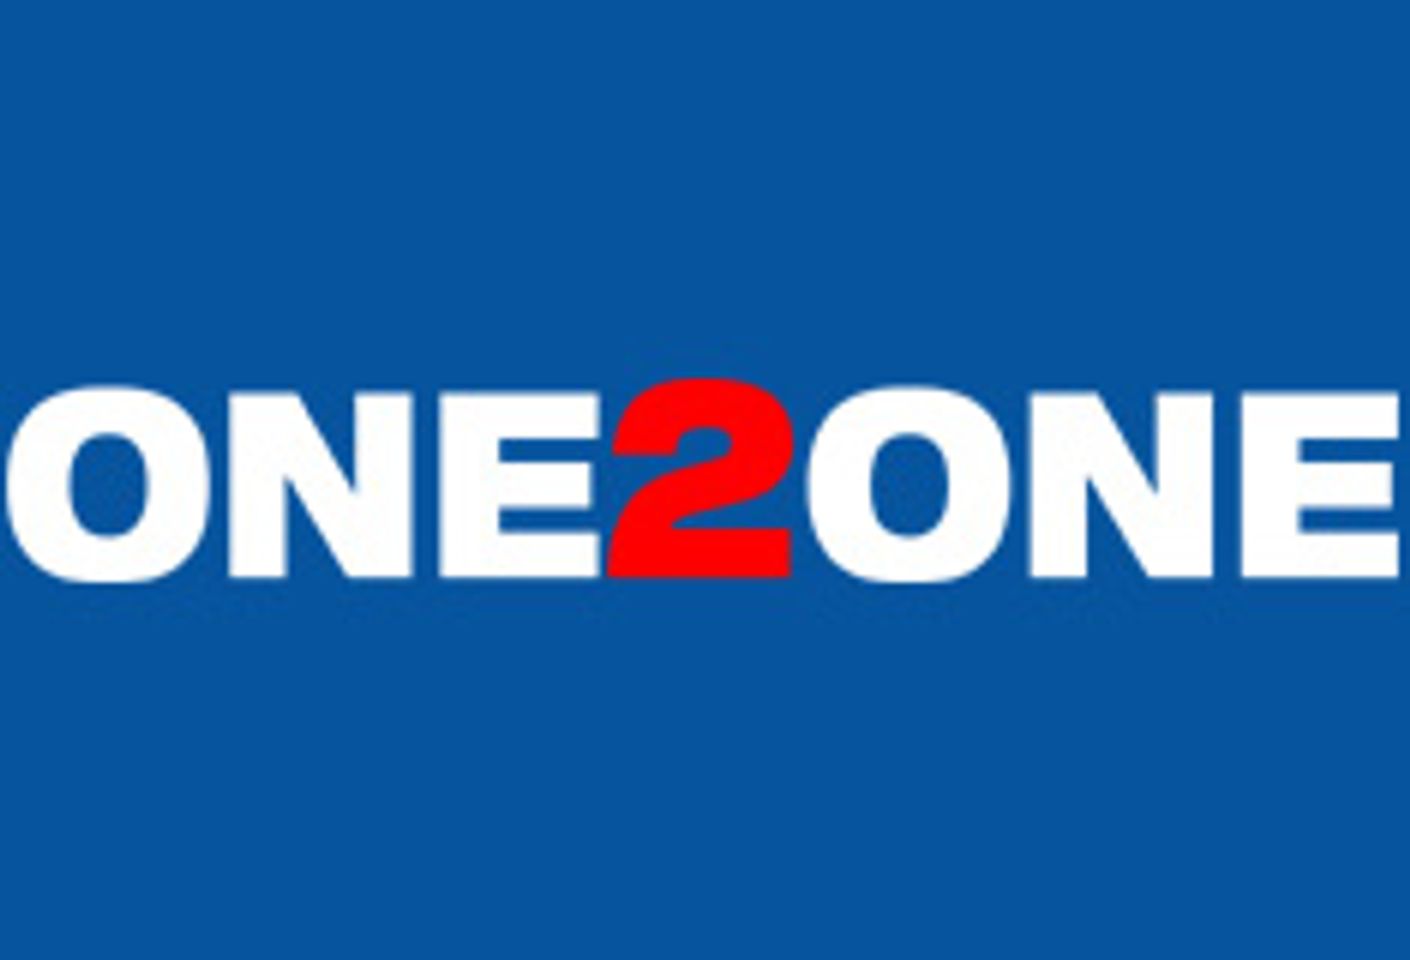 one2one.com Rewarding Affiliates with Internext Contest - Online